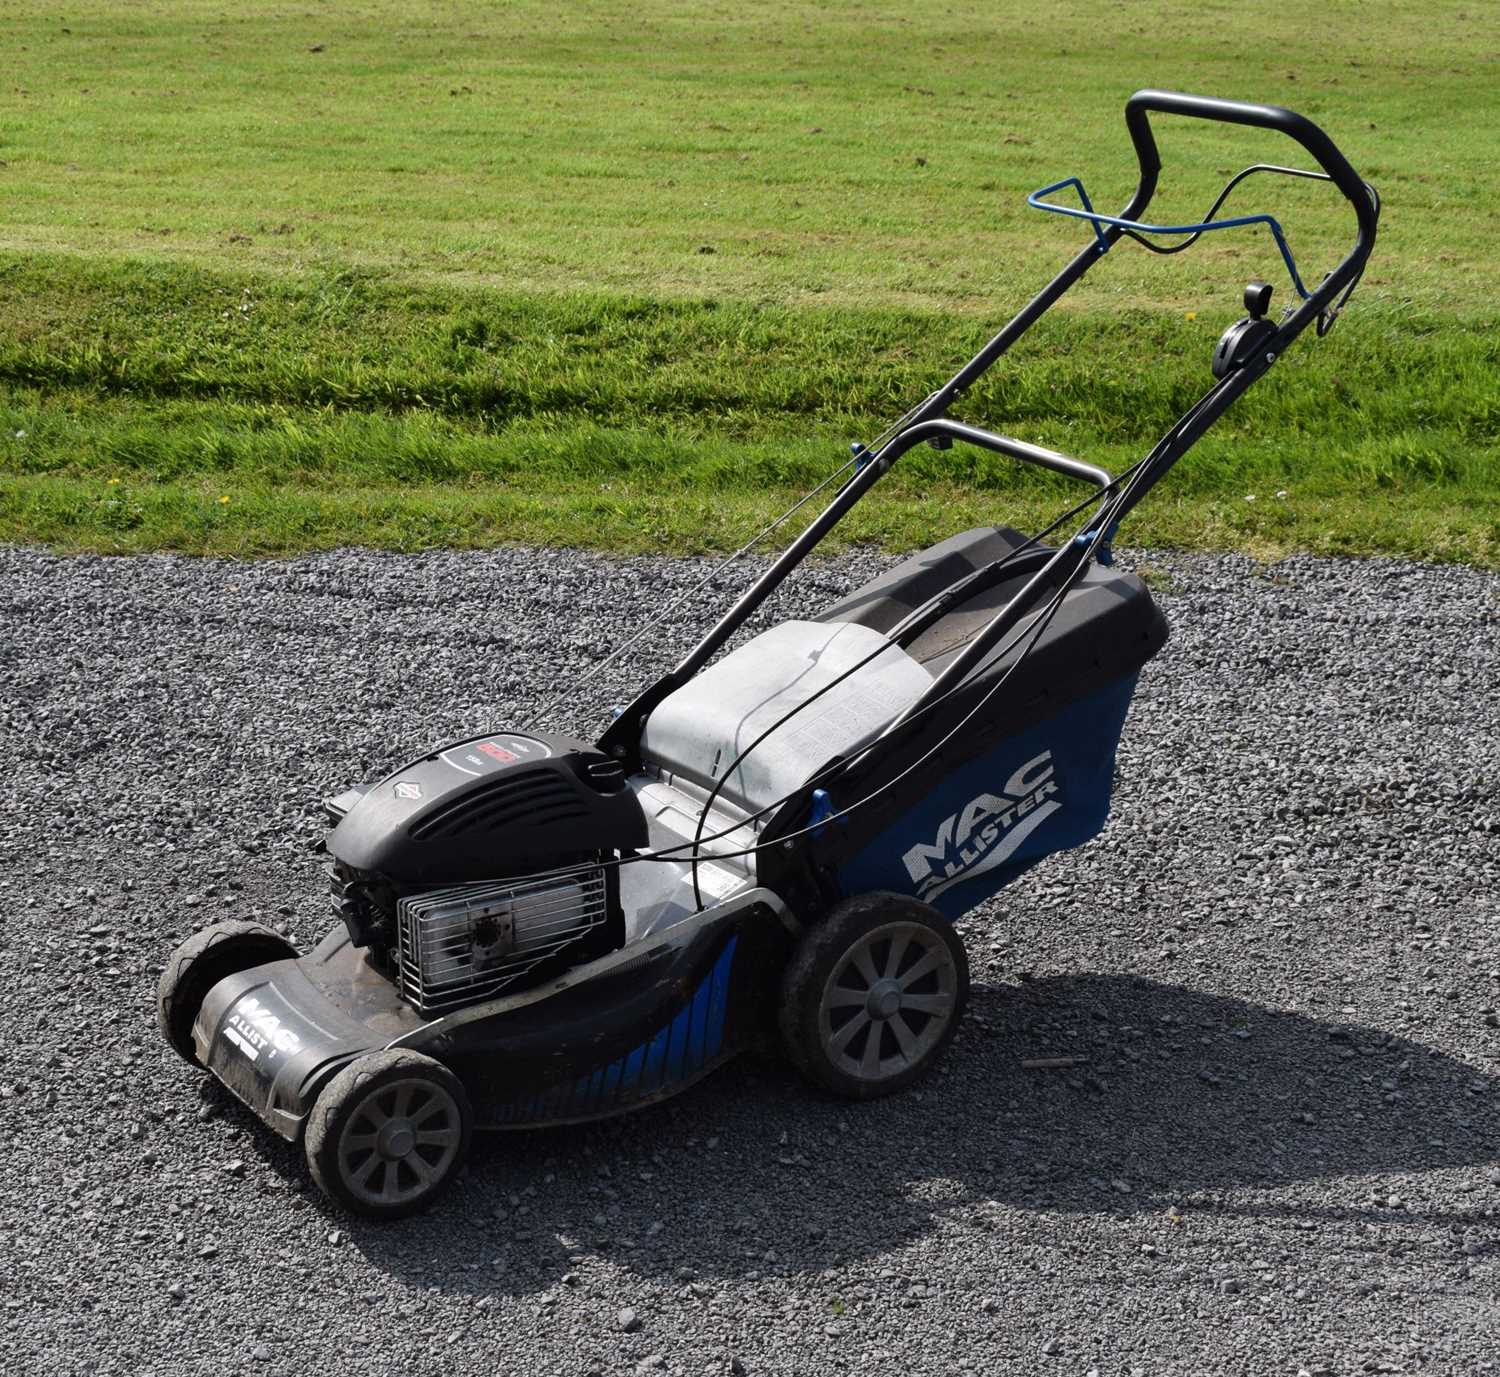 MacAllister self-propelled lawn mower